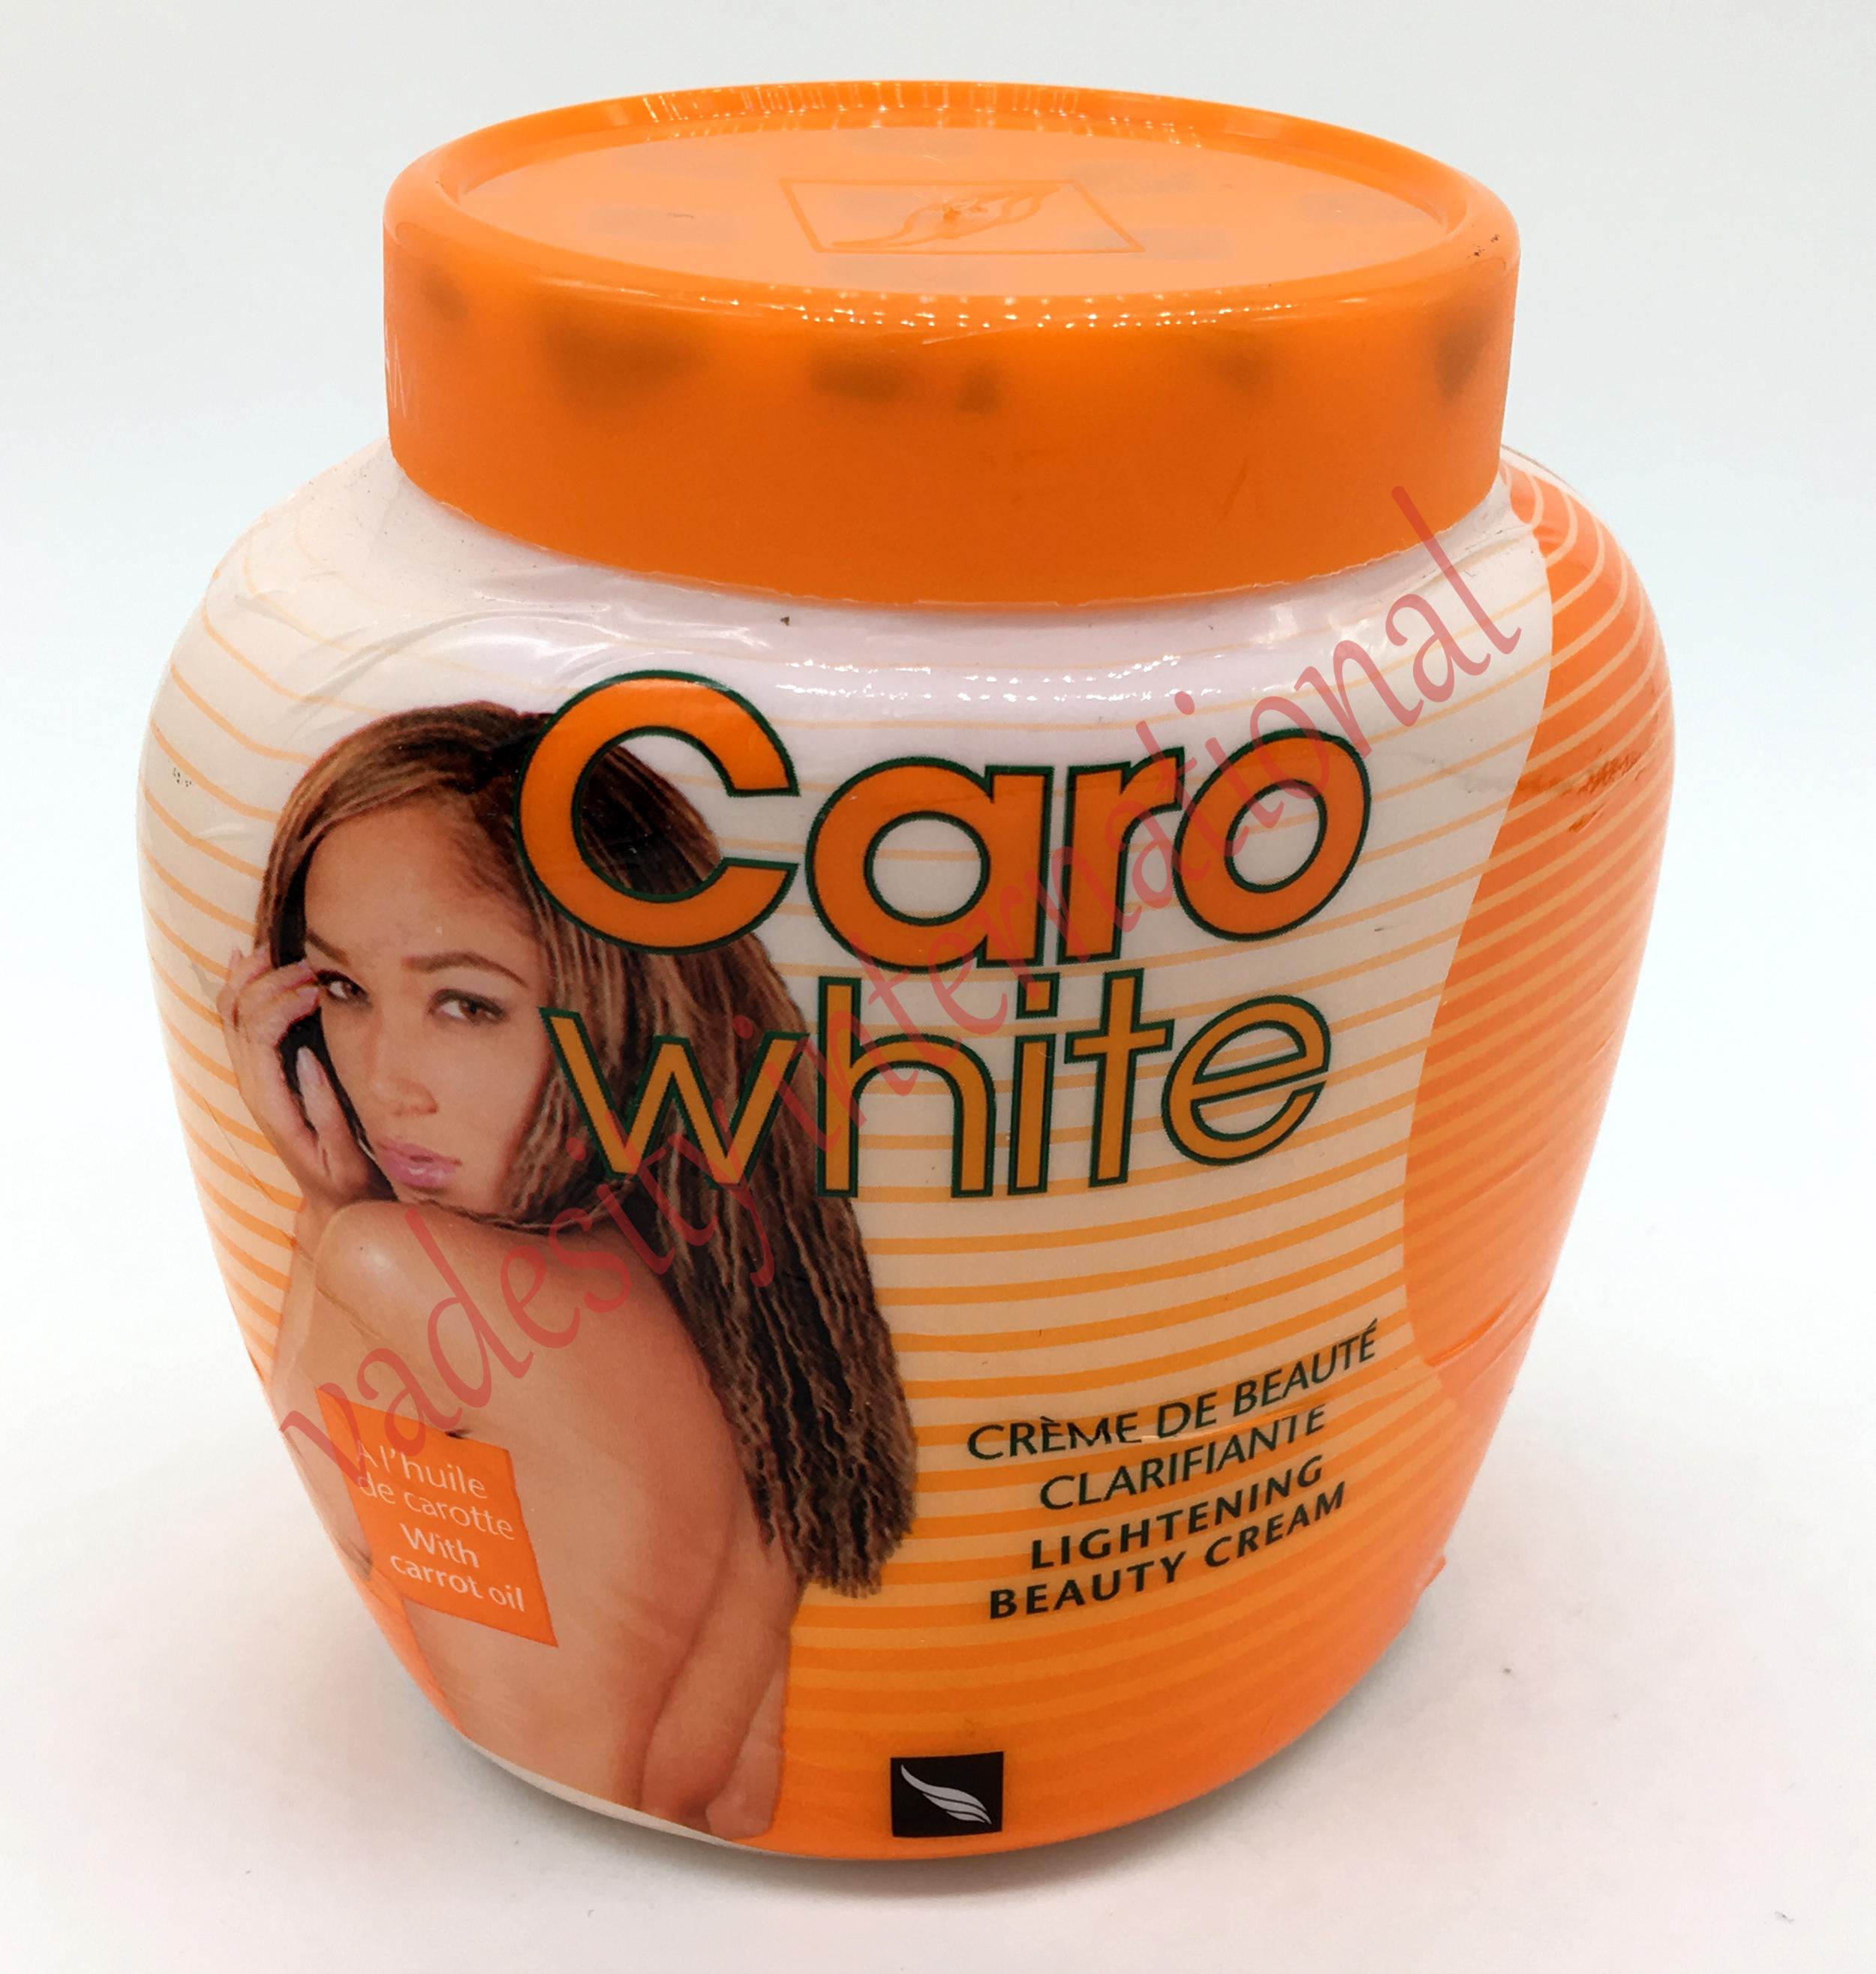 Original caro white lightening beauty body cream 120ml - Price history &  Review, AliExpress Seller - Minren Beauty&Healthcare LTD